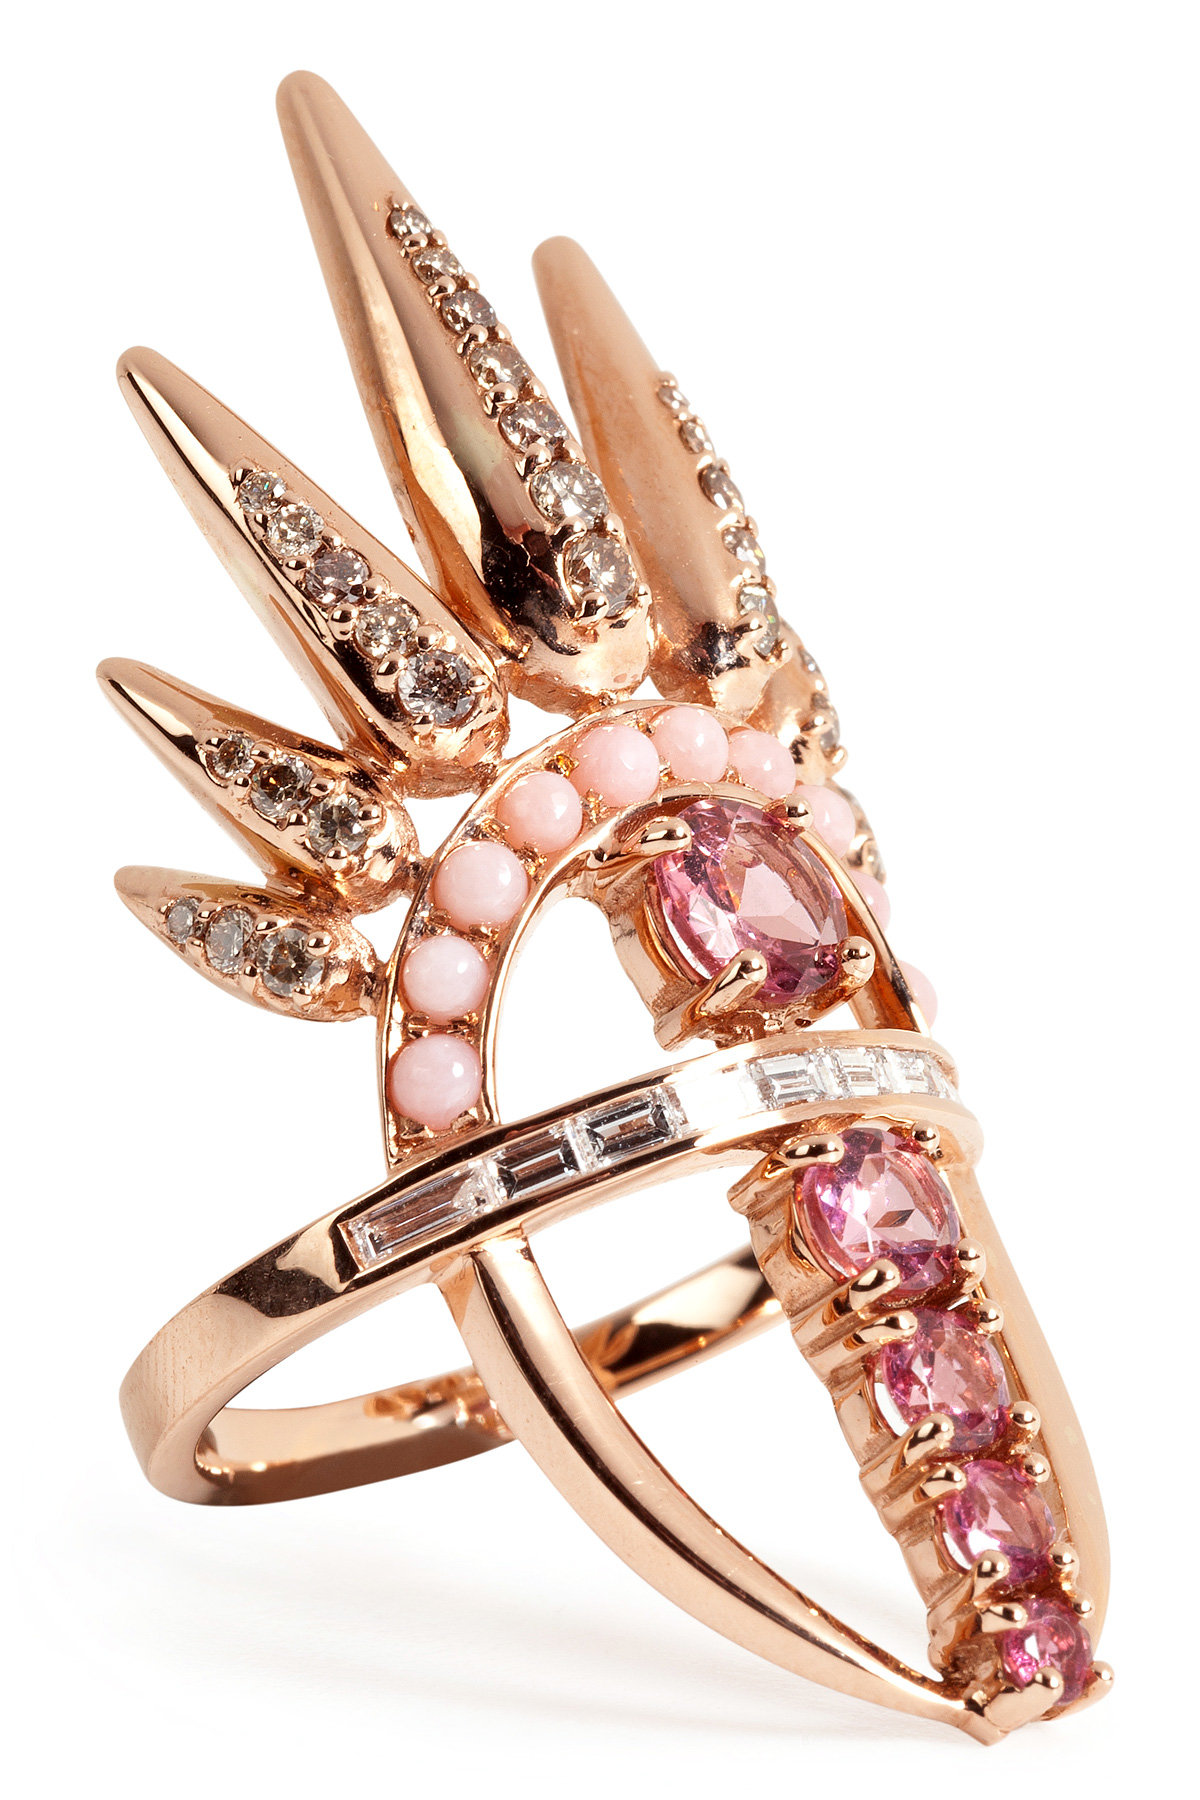 Nikos Koulis - 18kt Pink Gold Spectrum Ring with Diamonds and Tourmaline